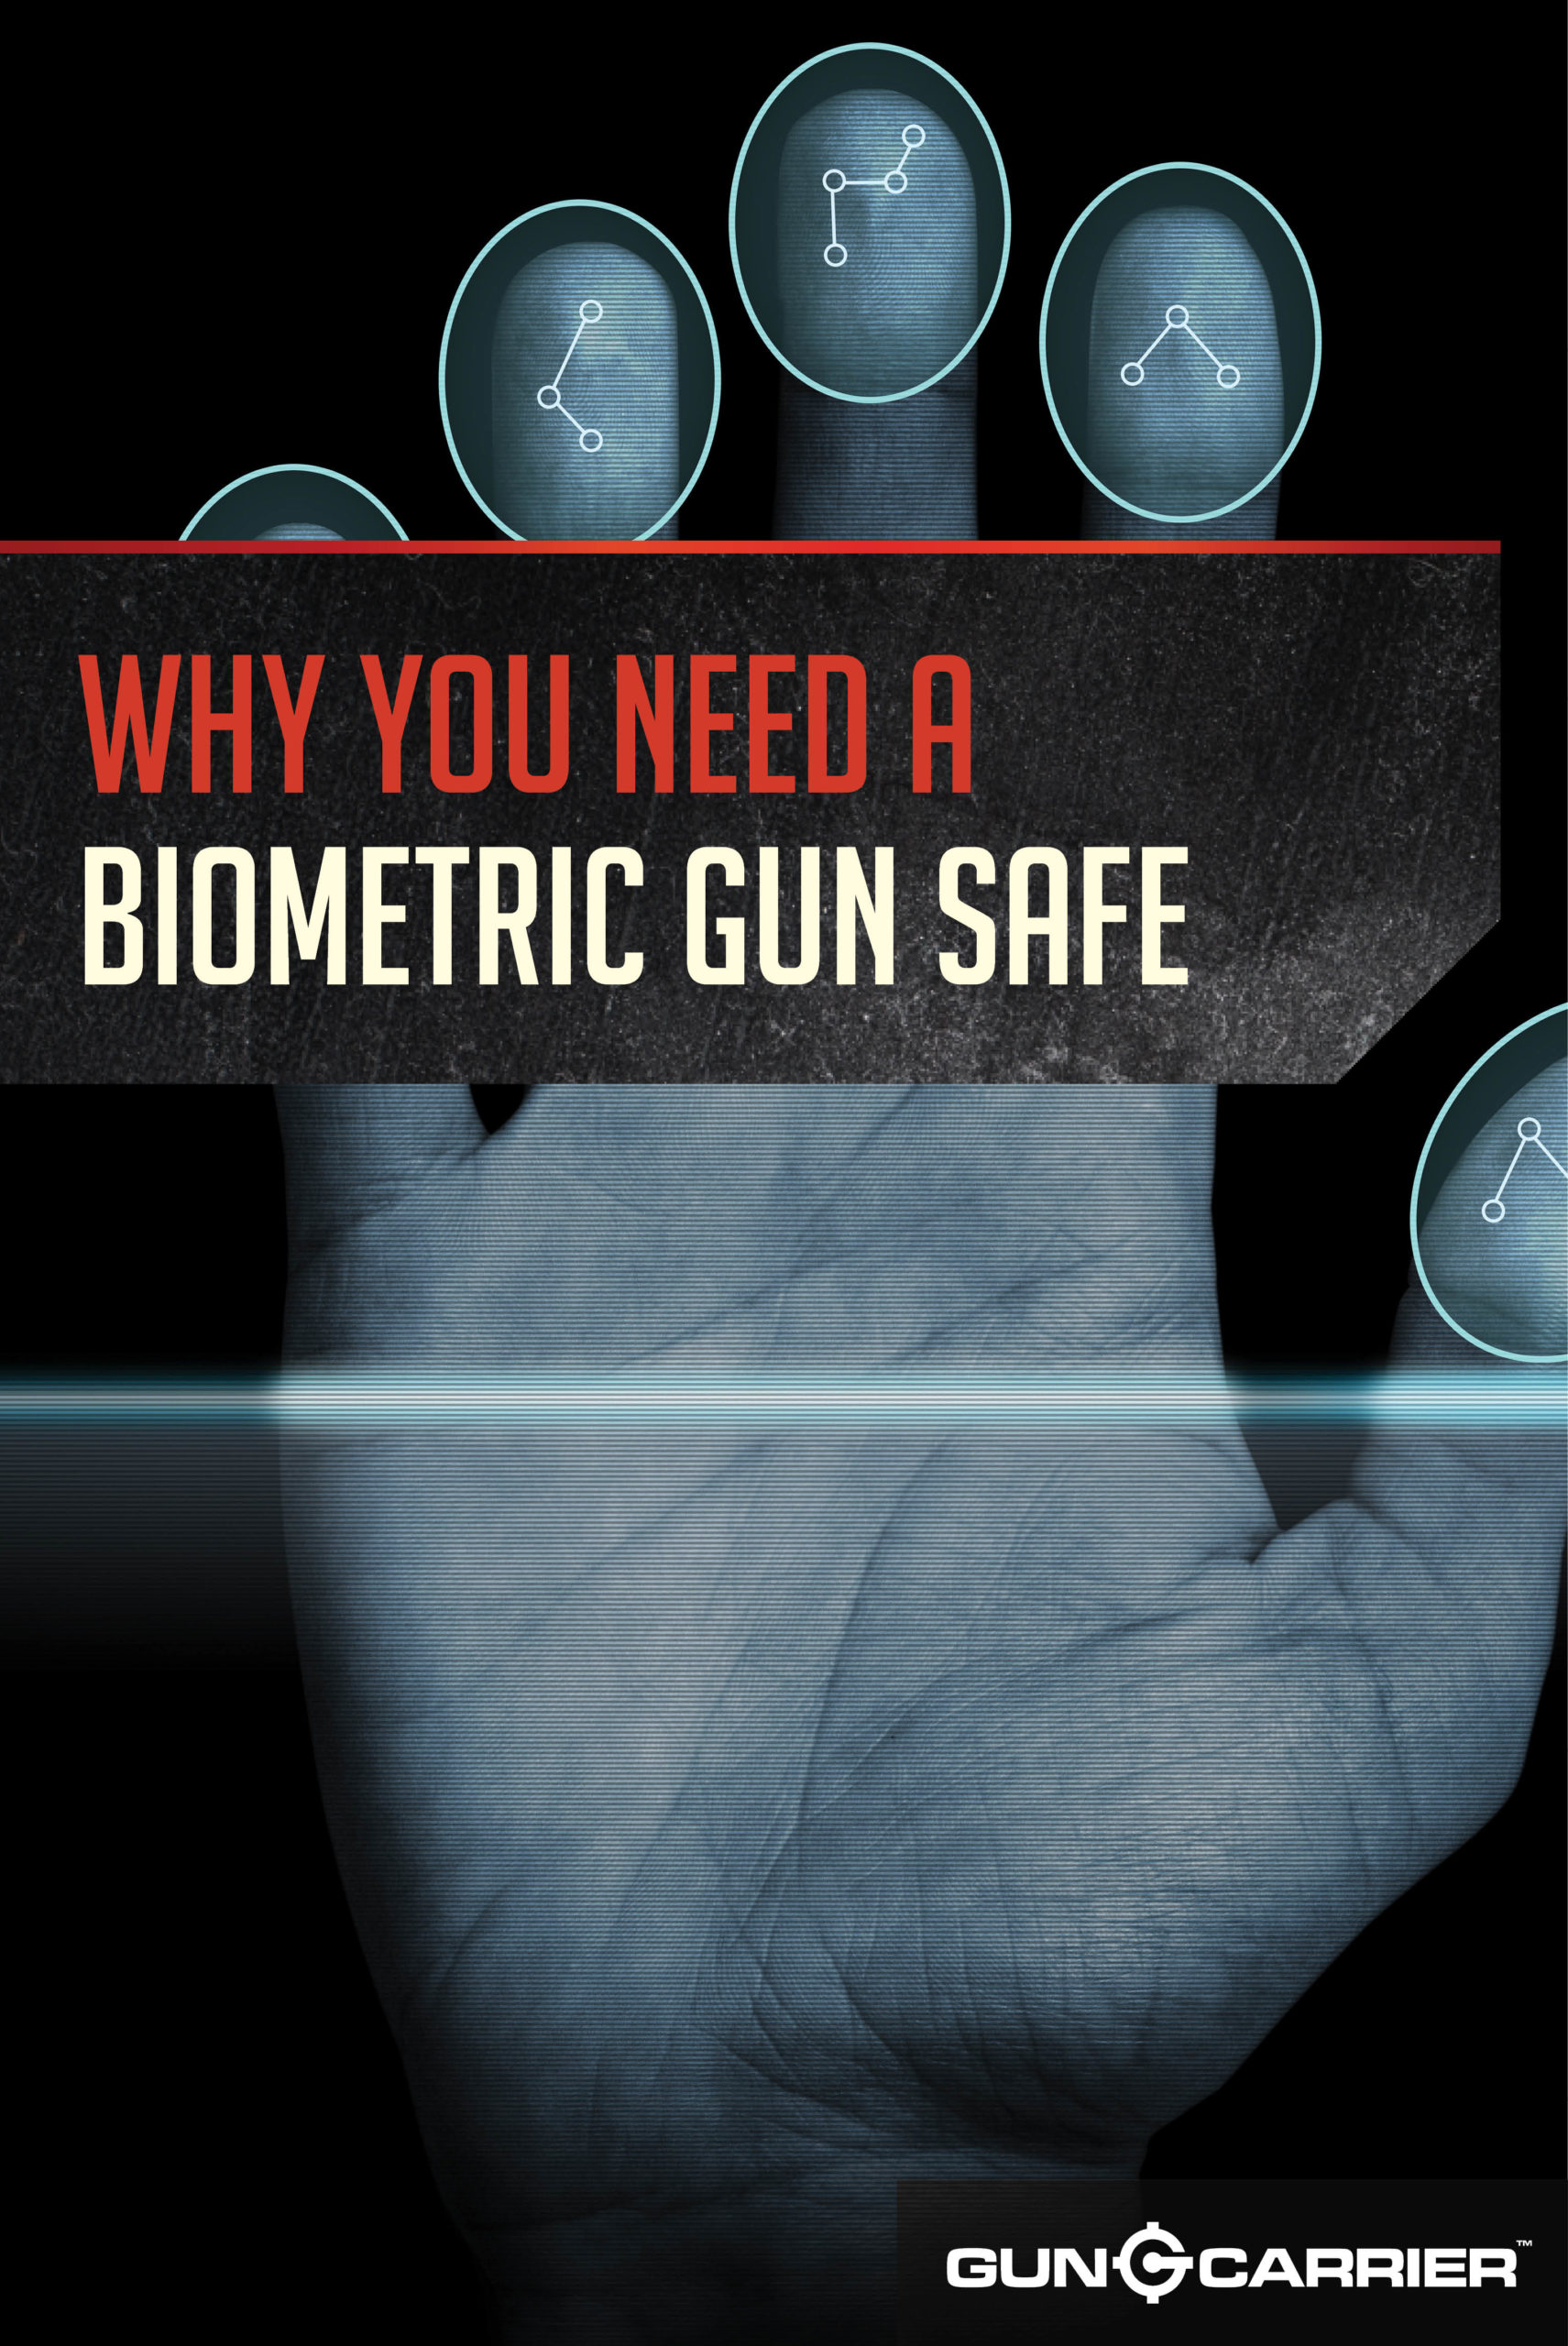 The Pros of a Biometric Gun Safe by Gun Carrier at https://guncarrier.com/biometric-gun-safe-pros/